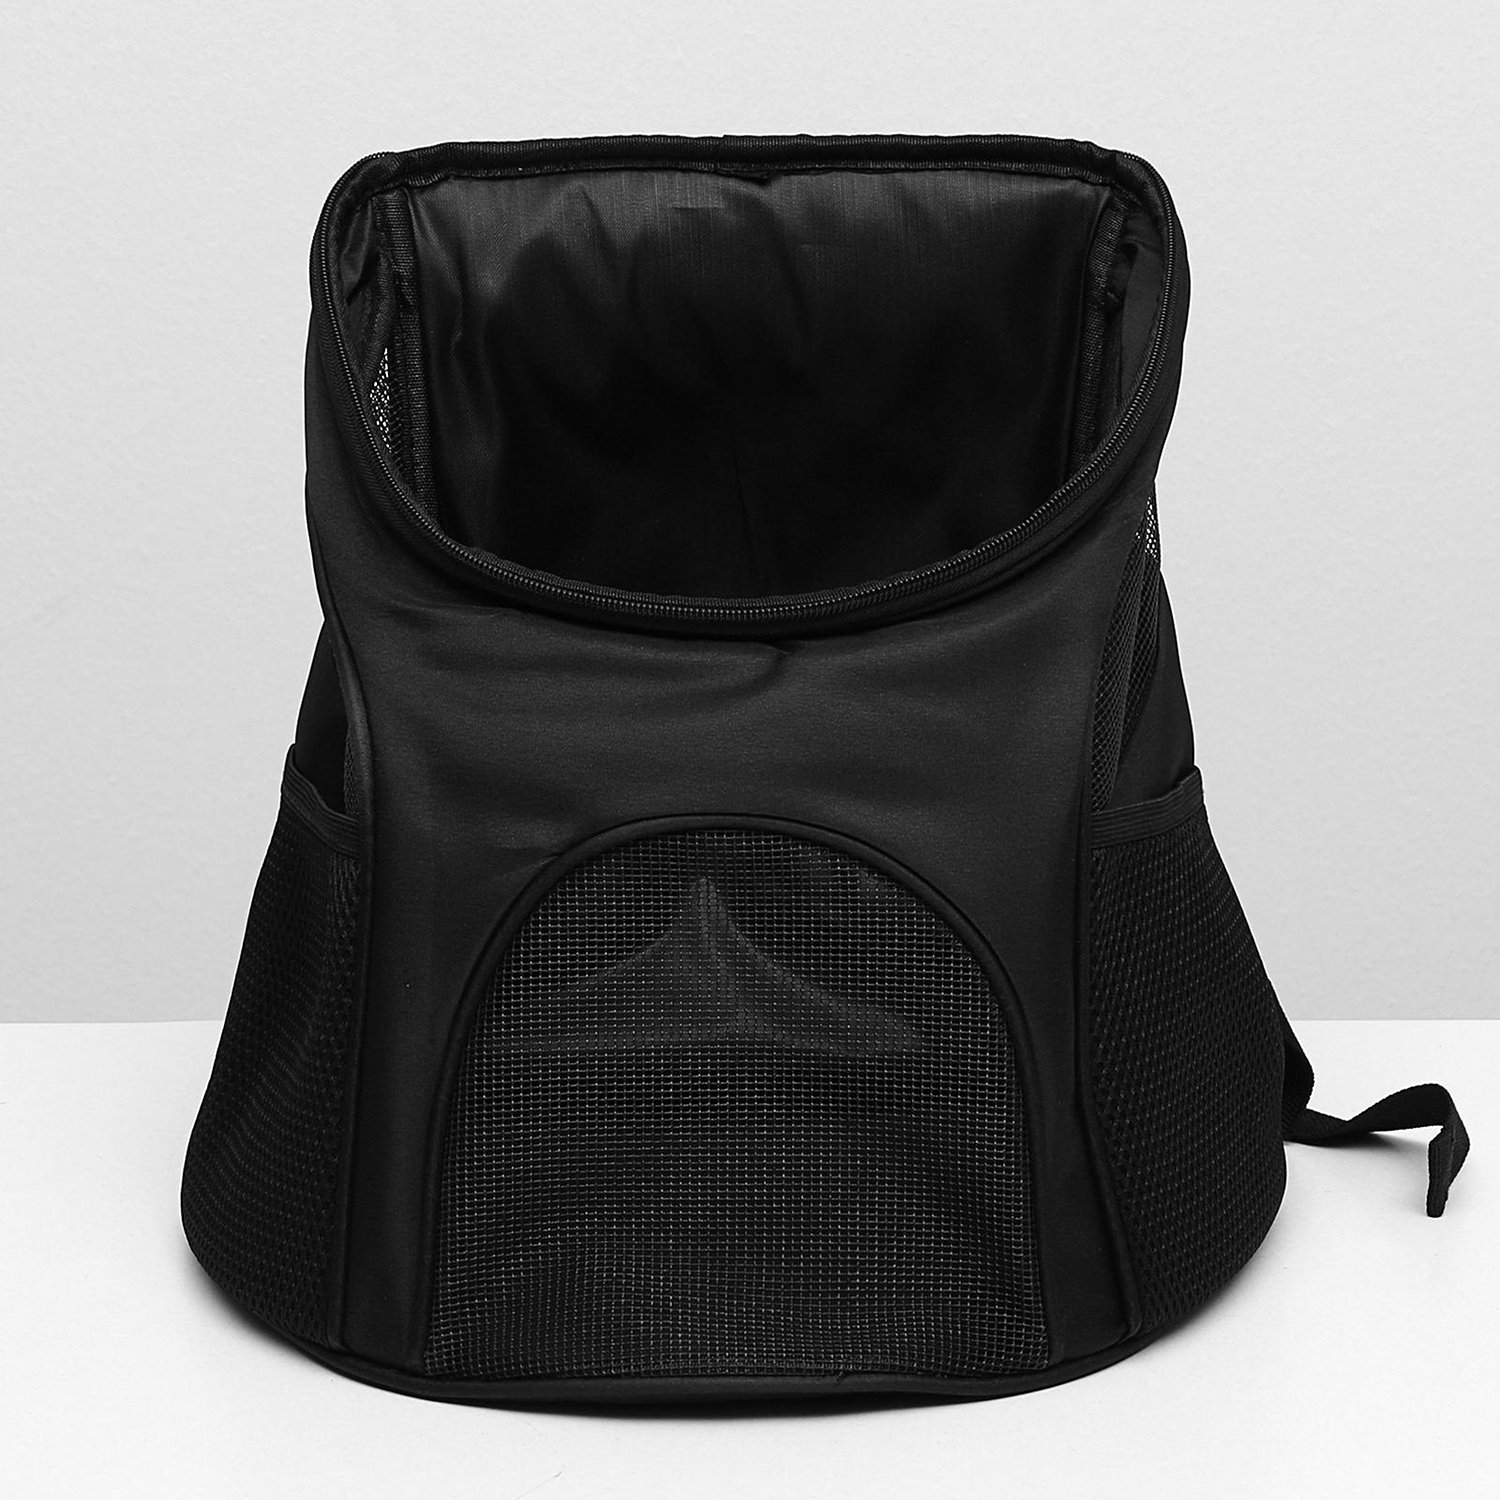 Рюкзак для переноски животных Пижон 315х25х33 см черный - фото 2